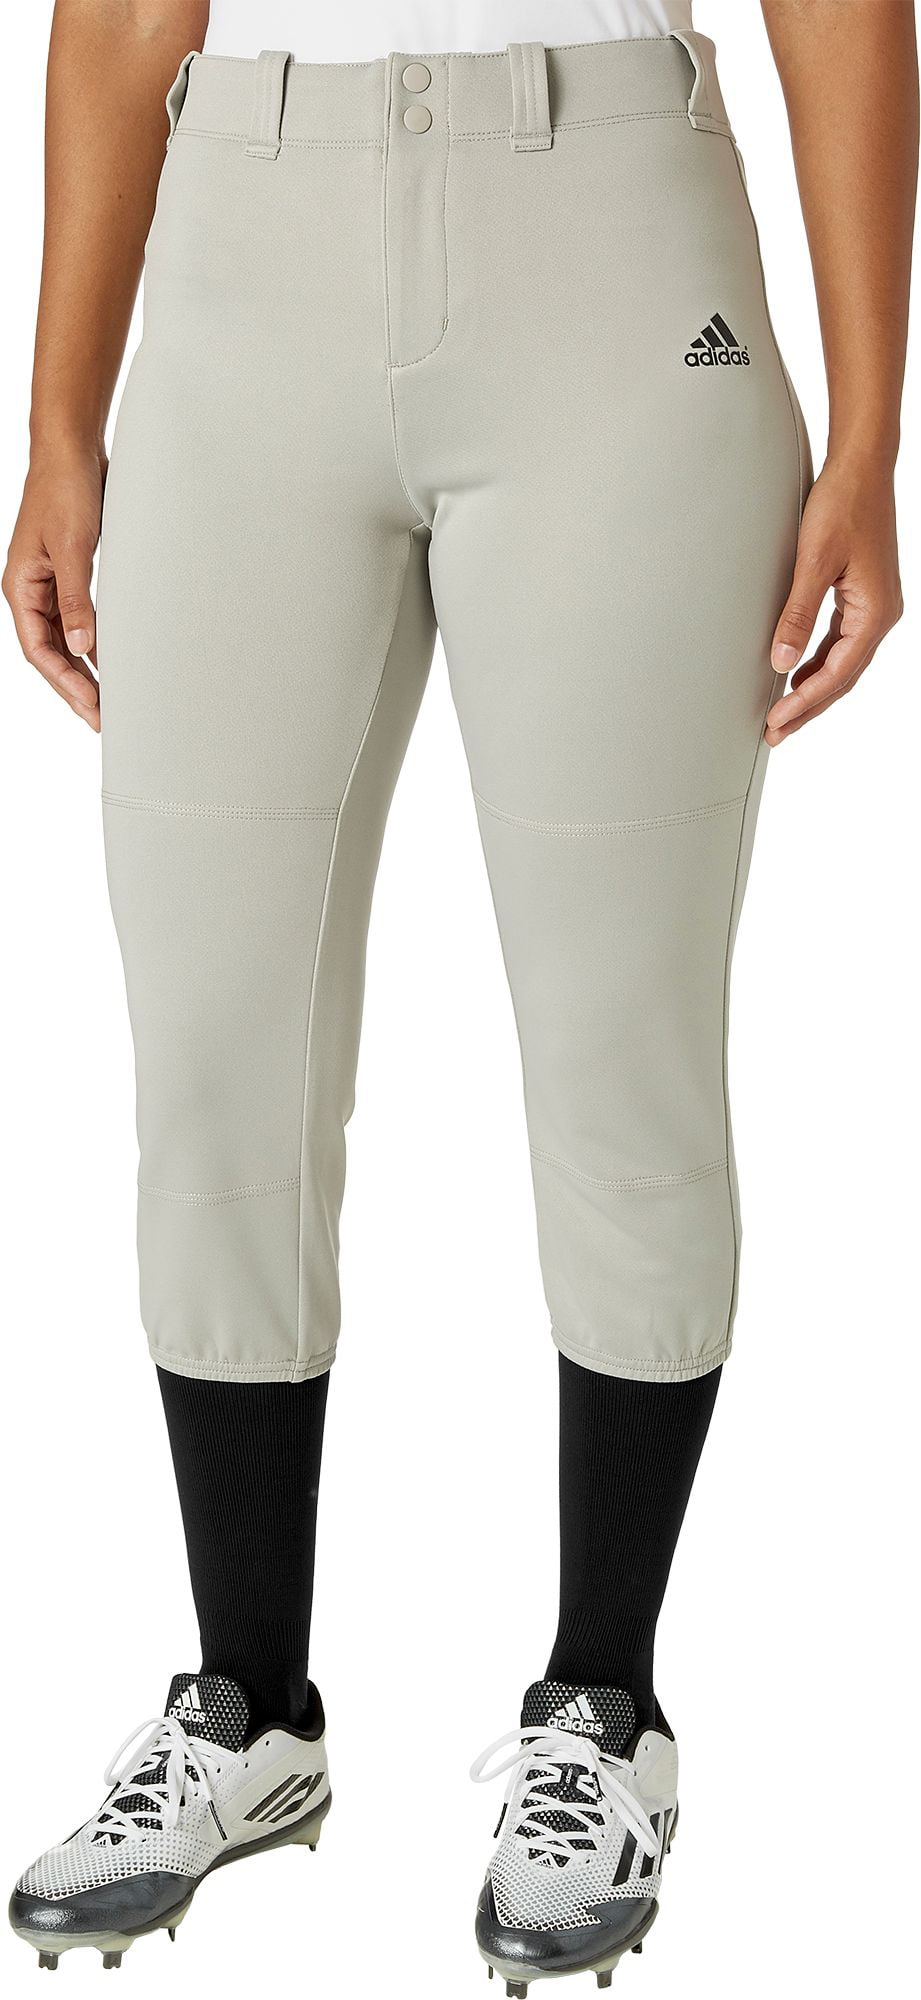 adidas women's softball pants